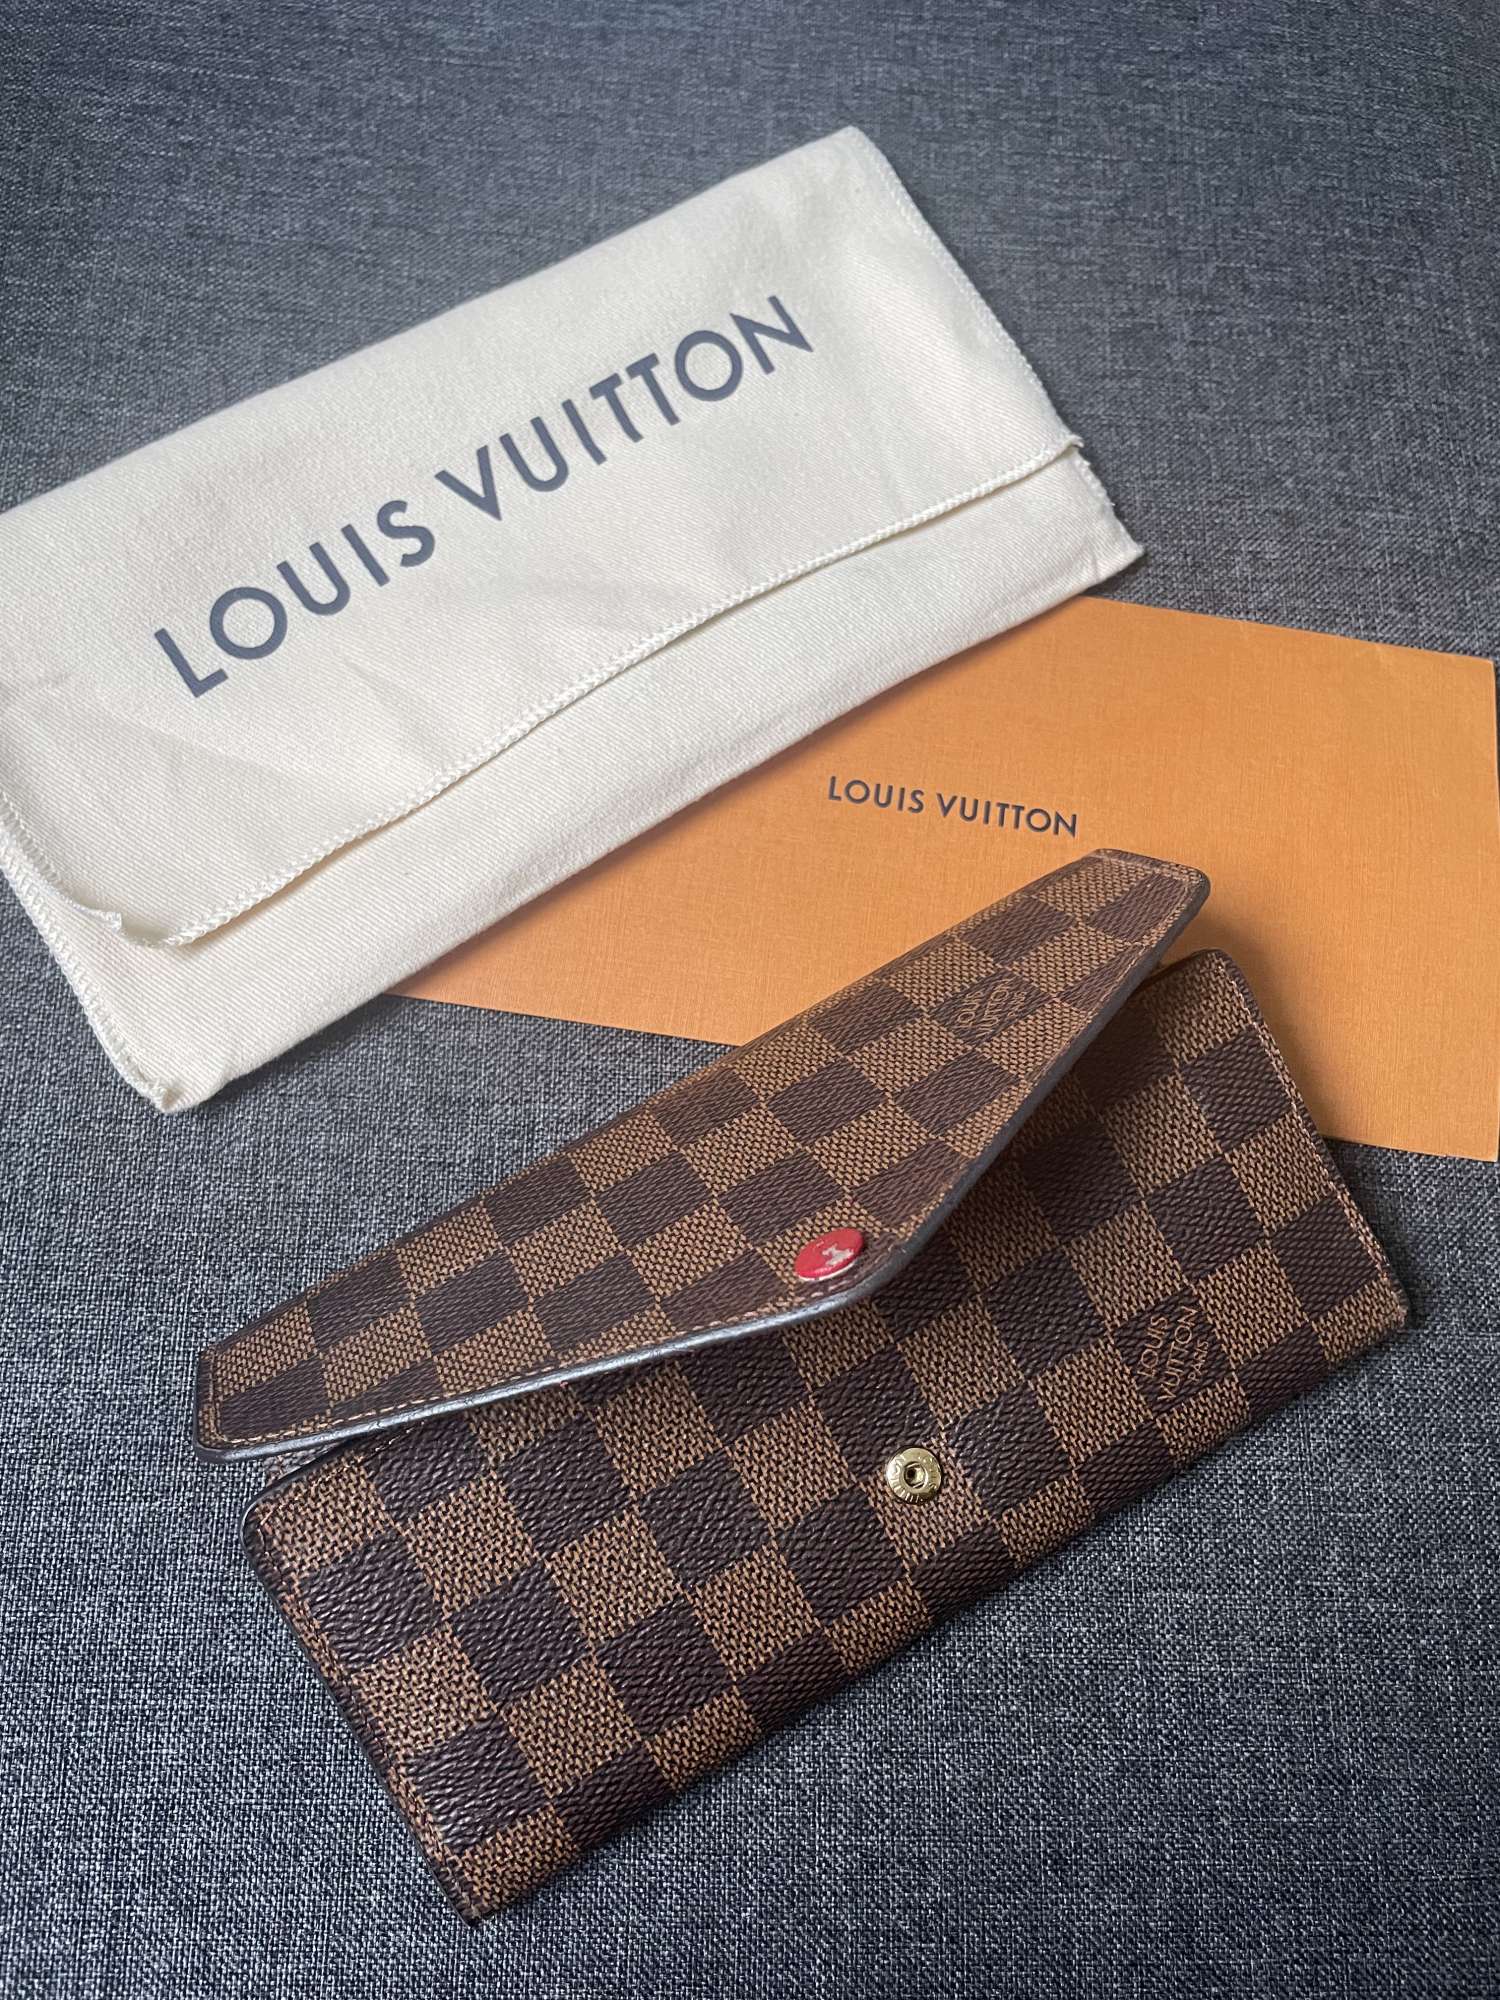 Louis Vuitton penazenka